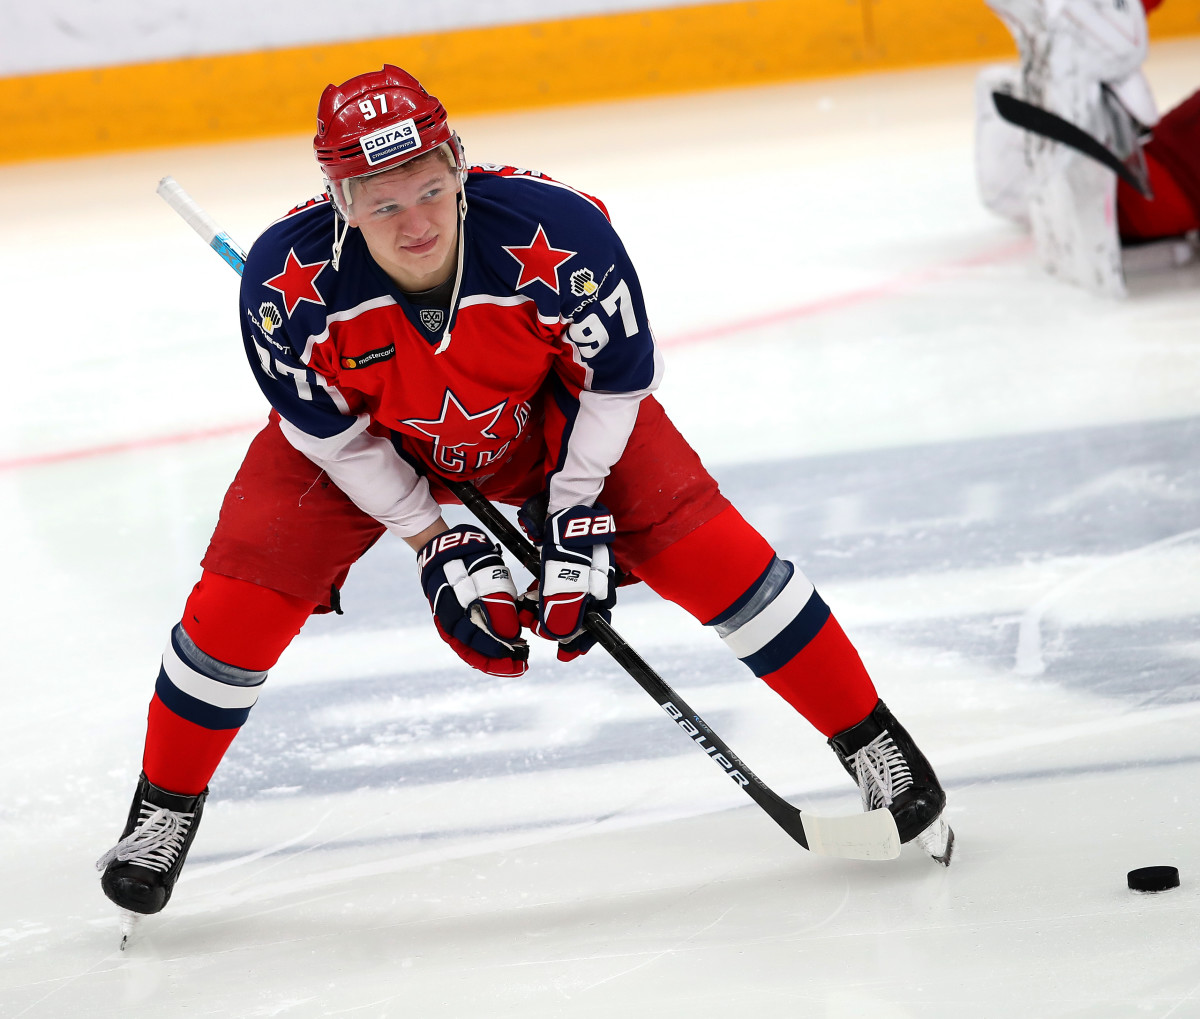 Minnesota Wild prospect Kirill Kaprizov continues to dominate the KHL